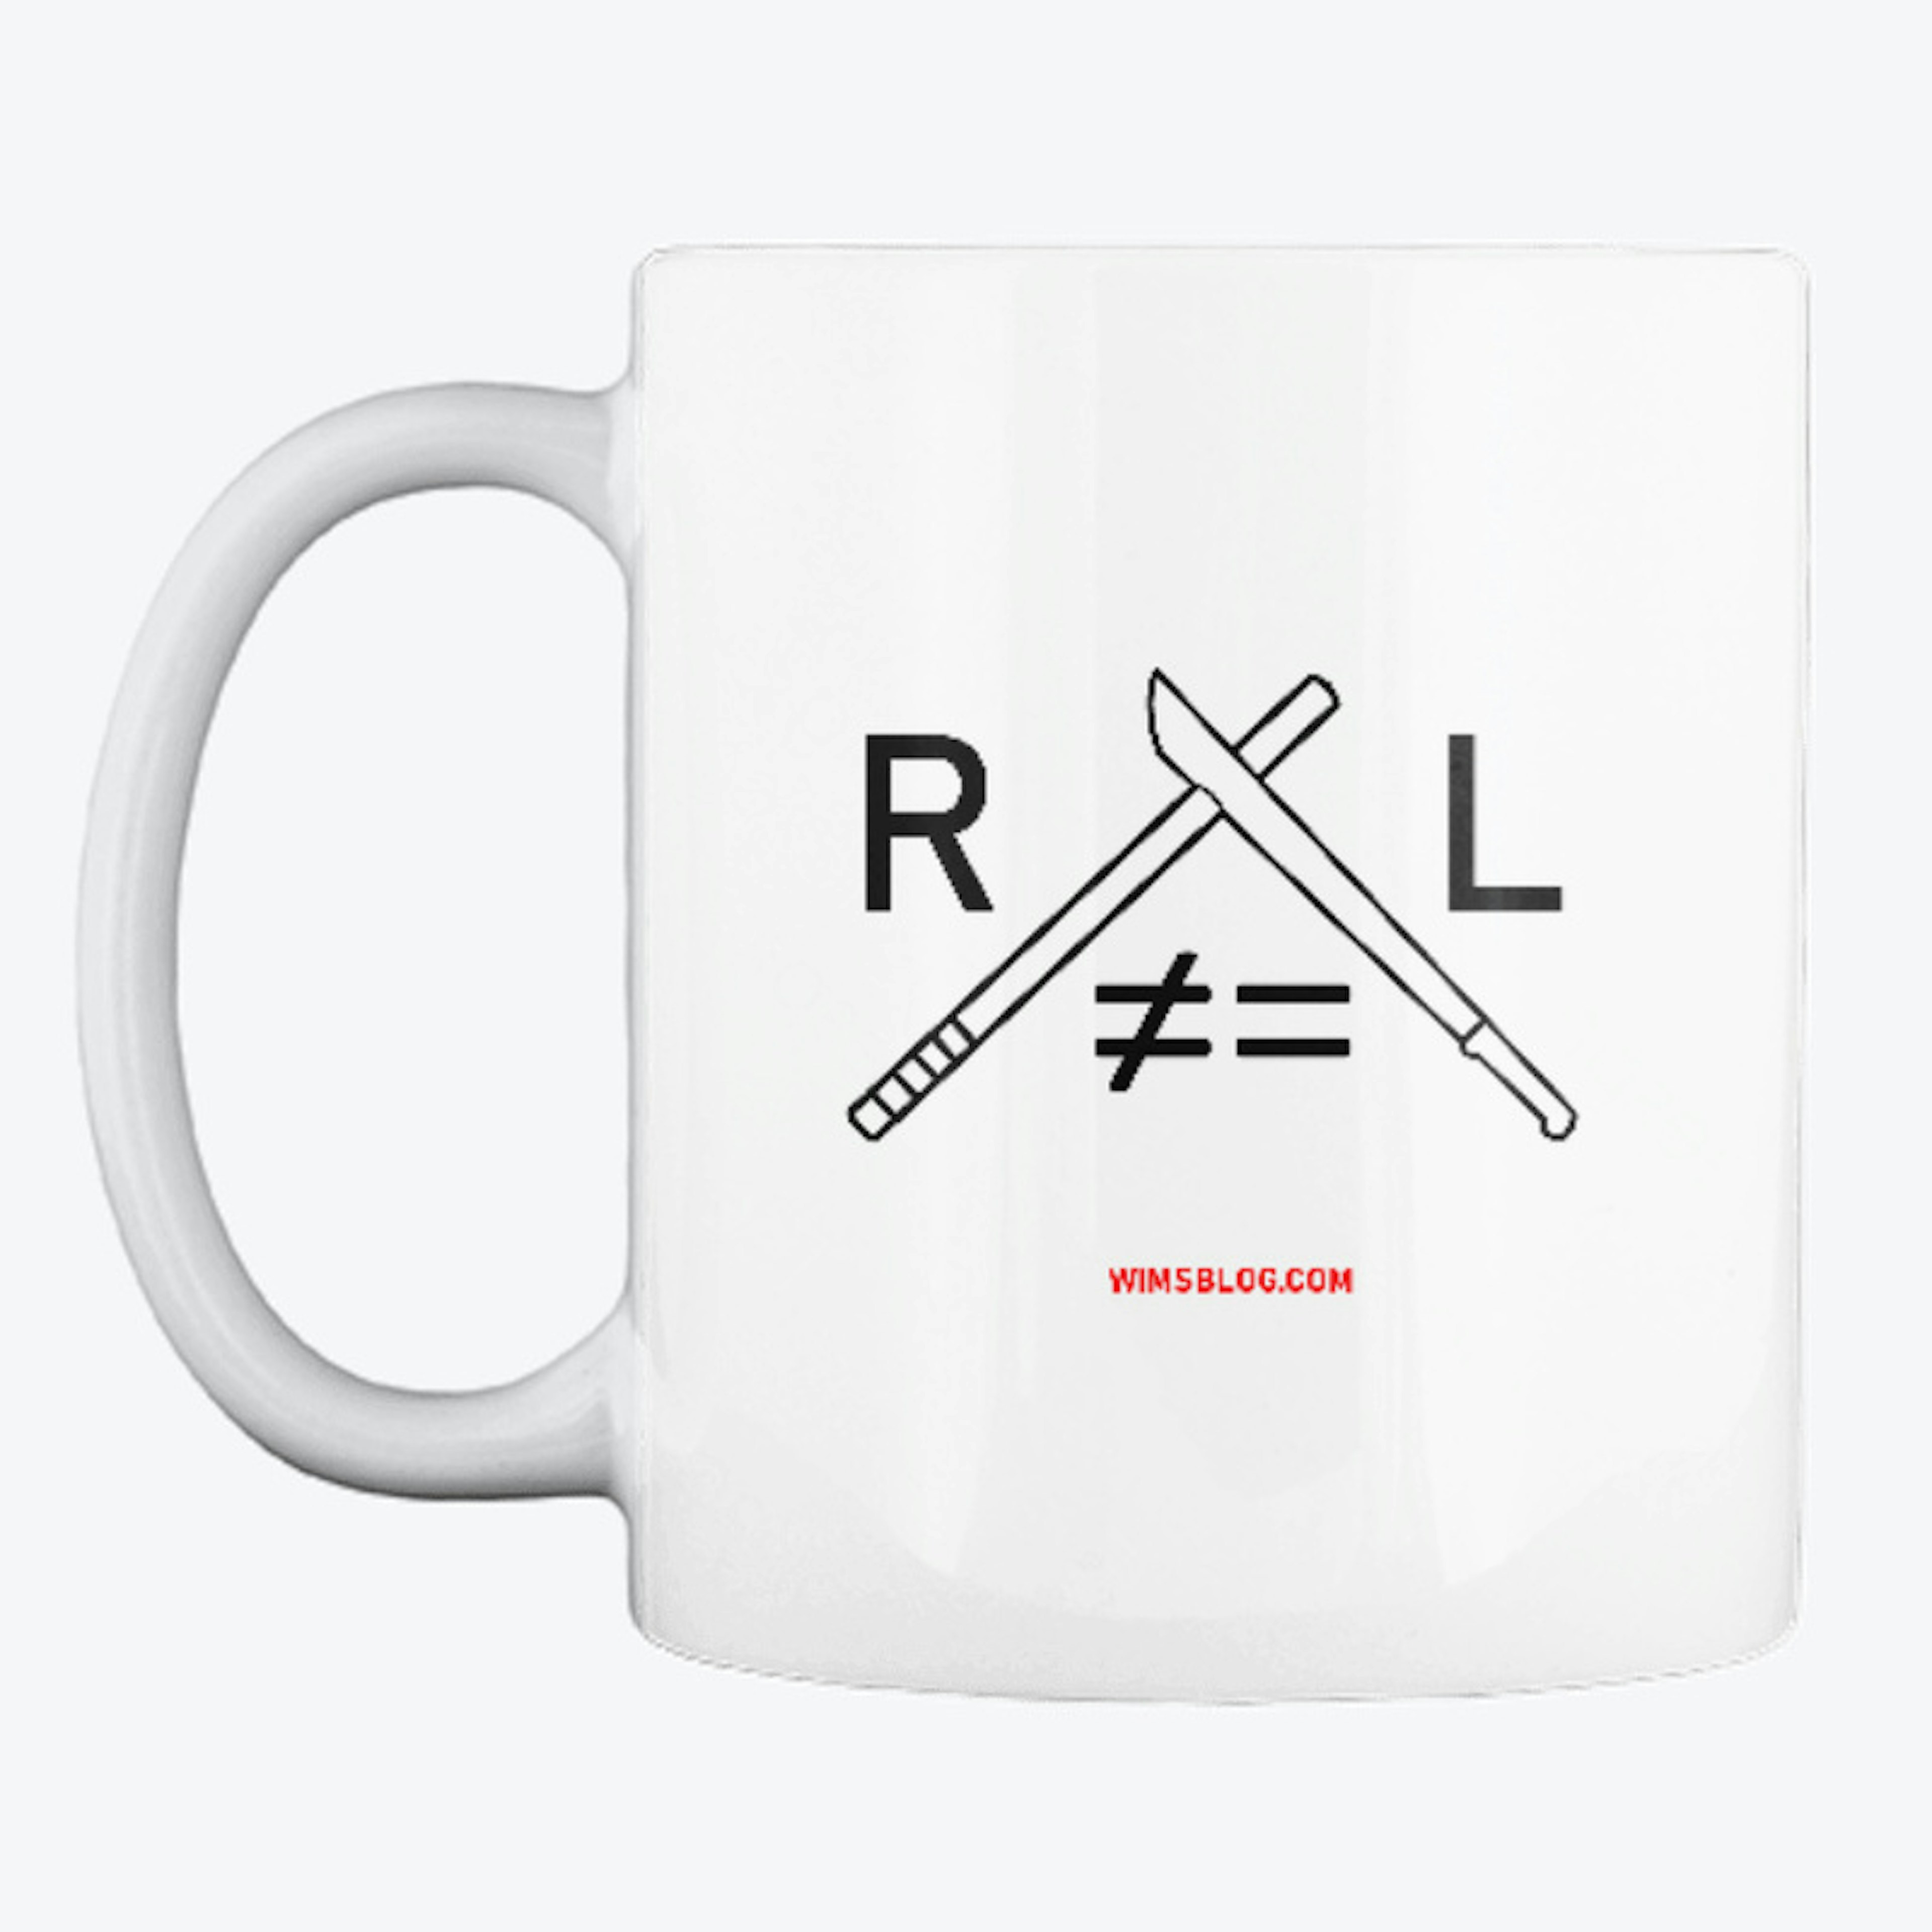 Randy's Law Mug